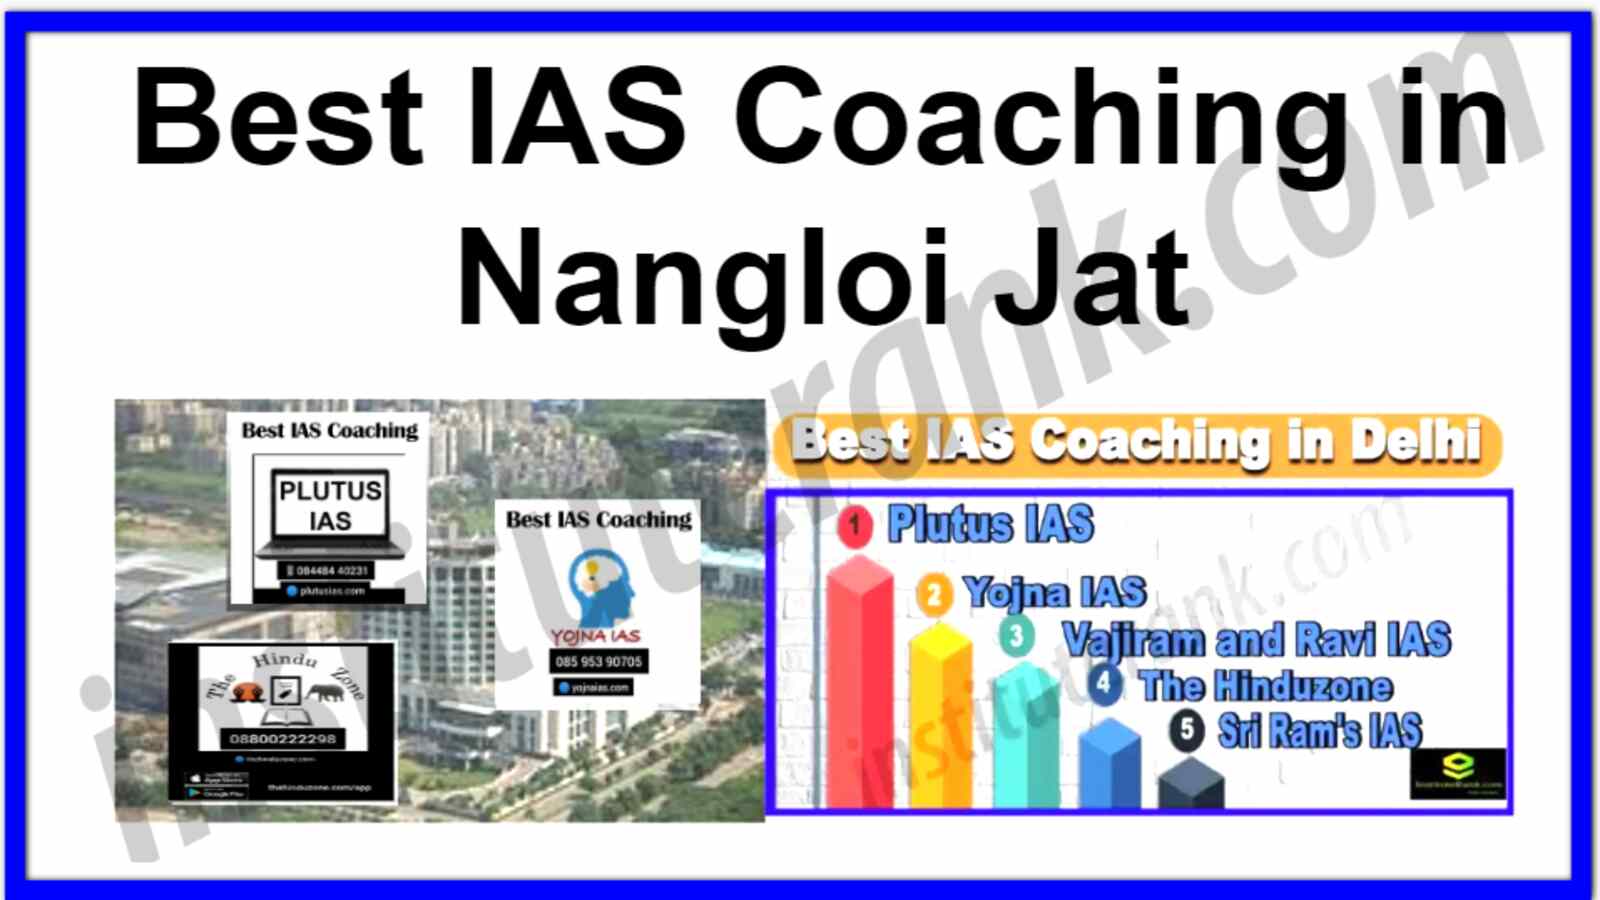 Best IAS Coaching in Nangloi jat